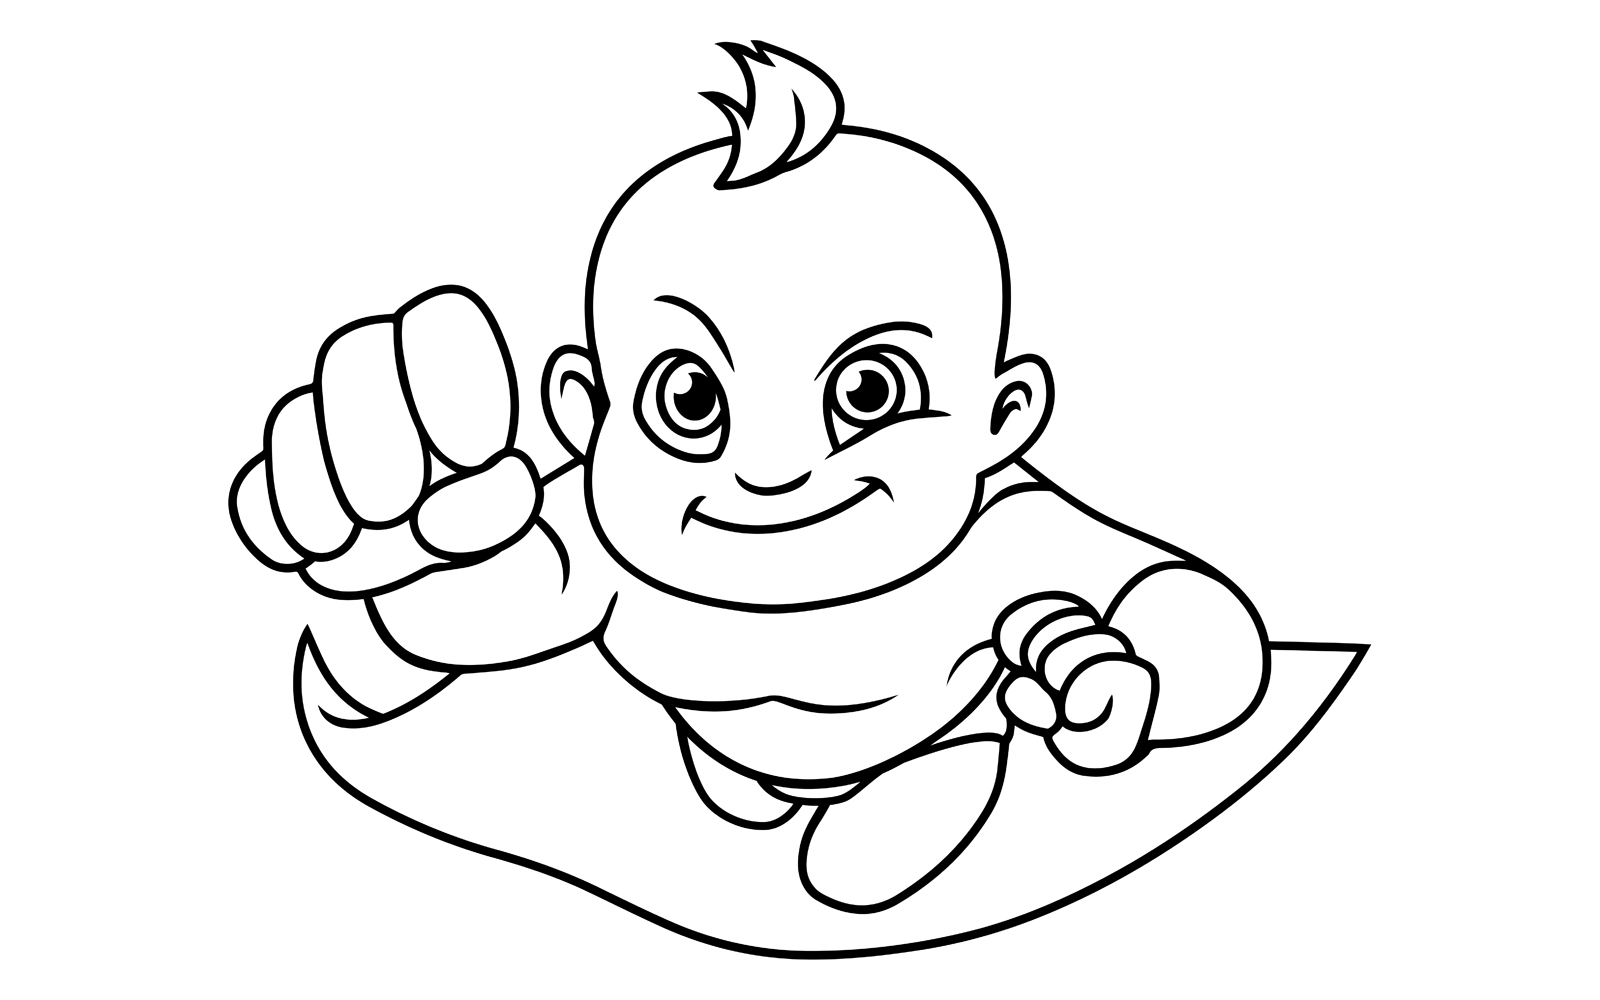 Super Baby Line Art - Illustration